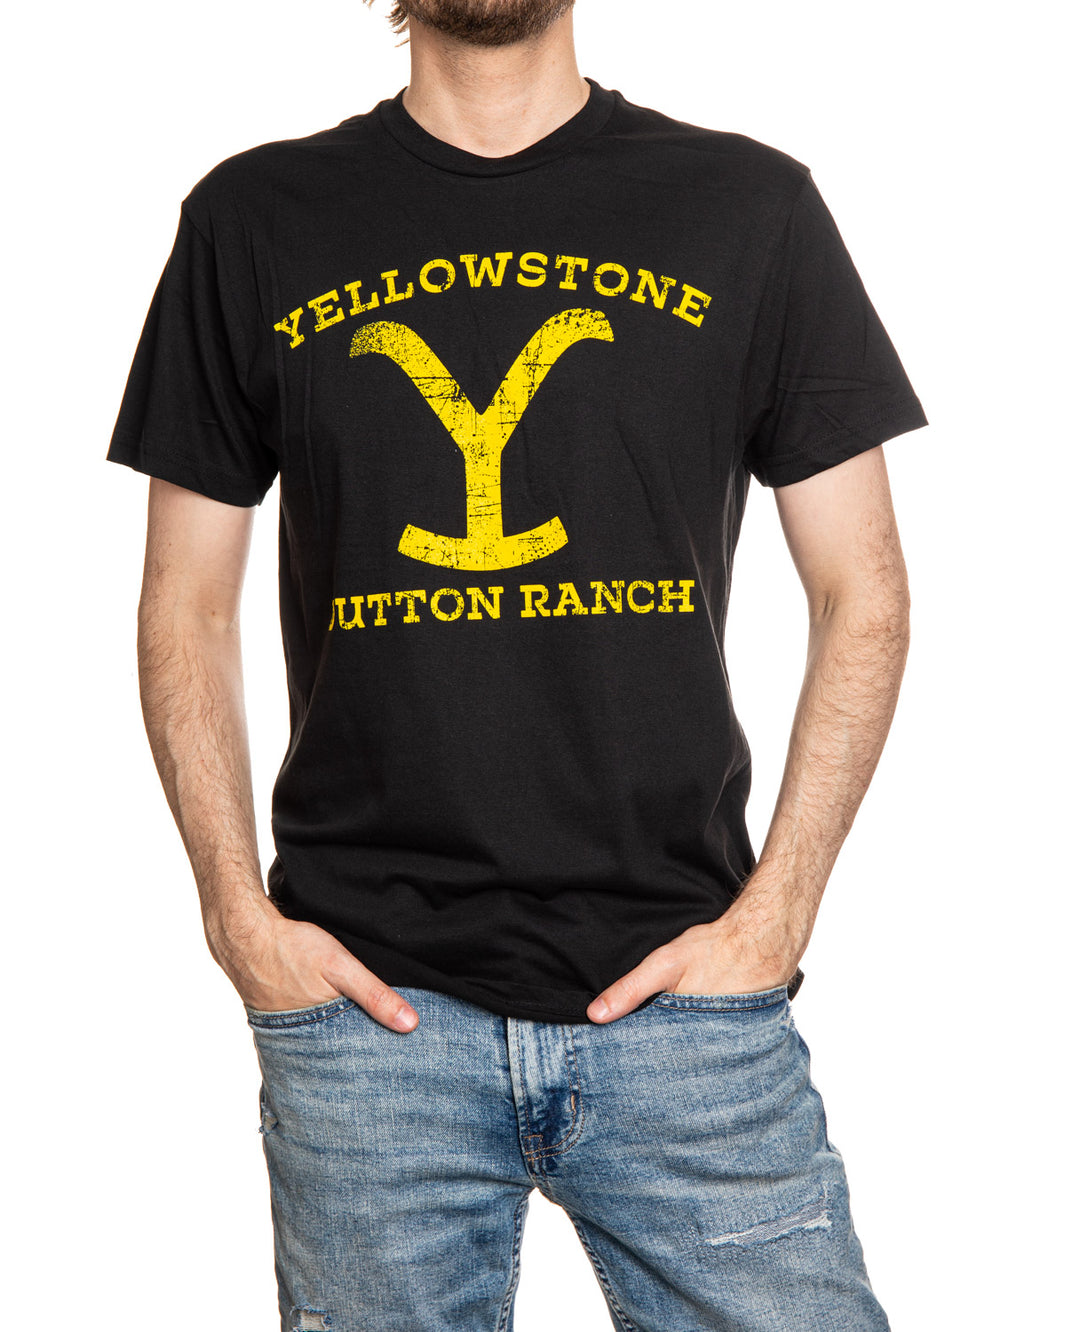 Yellowstone "Dutton Ranch" T-Shirt